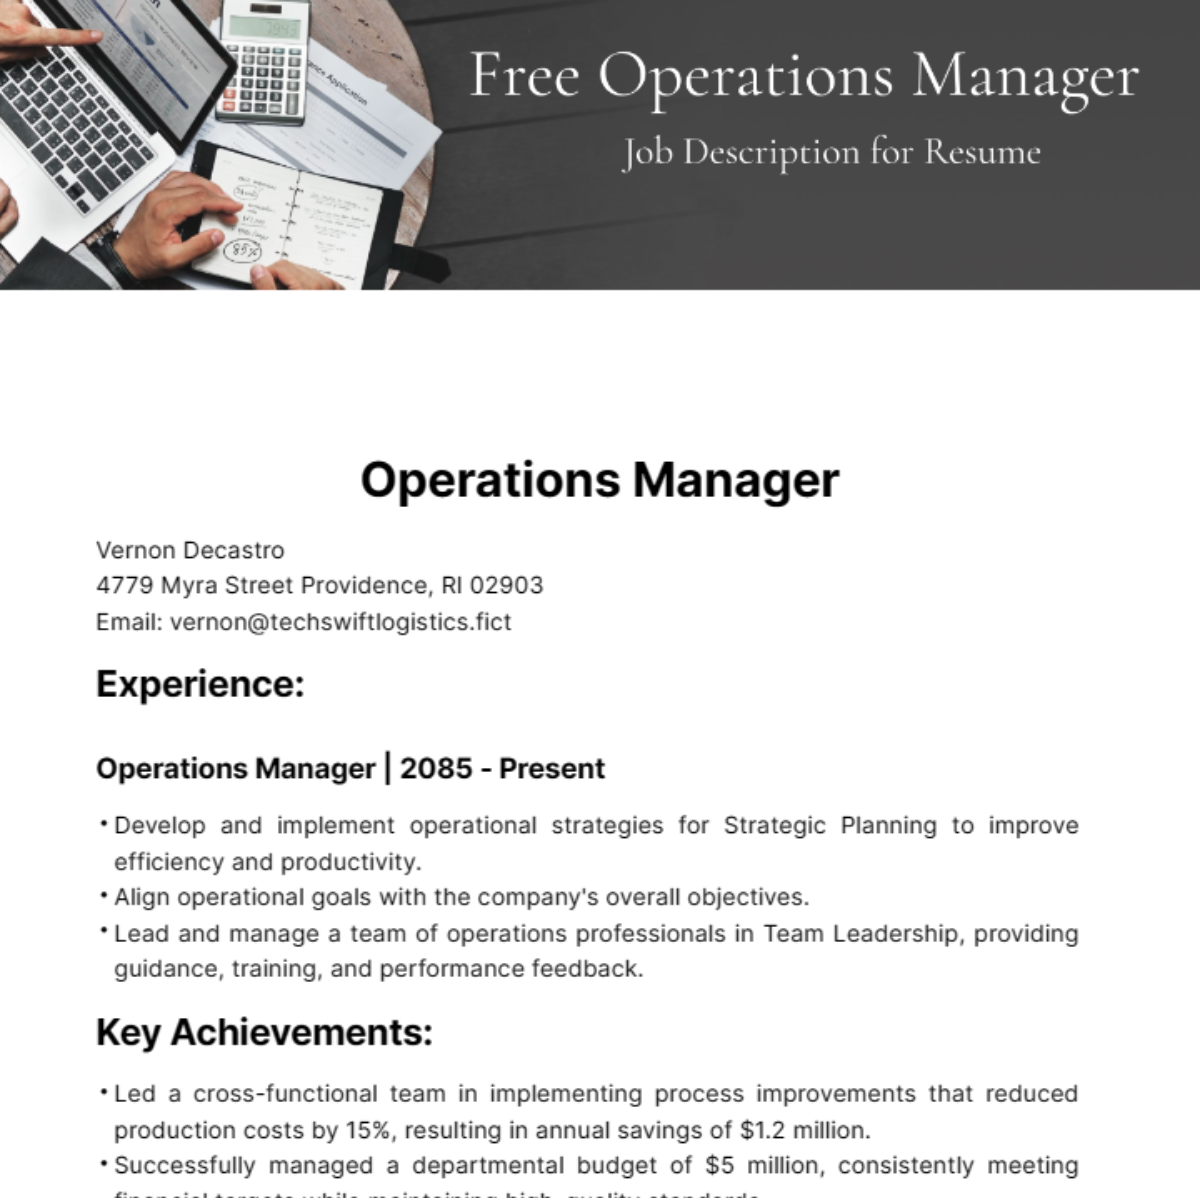 Operations Job Description for Resume Template